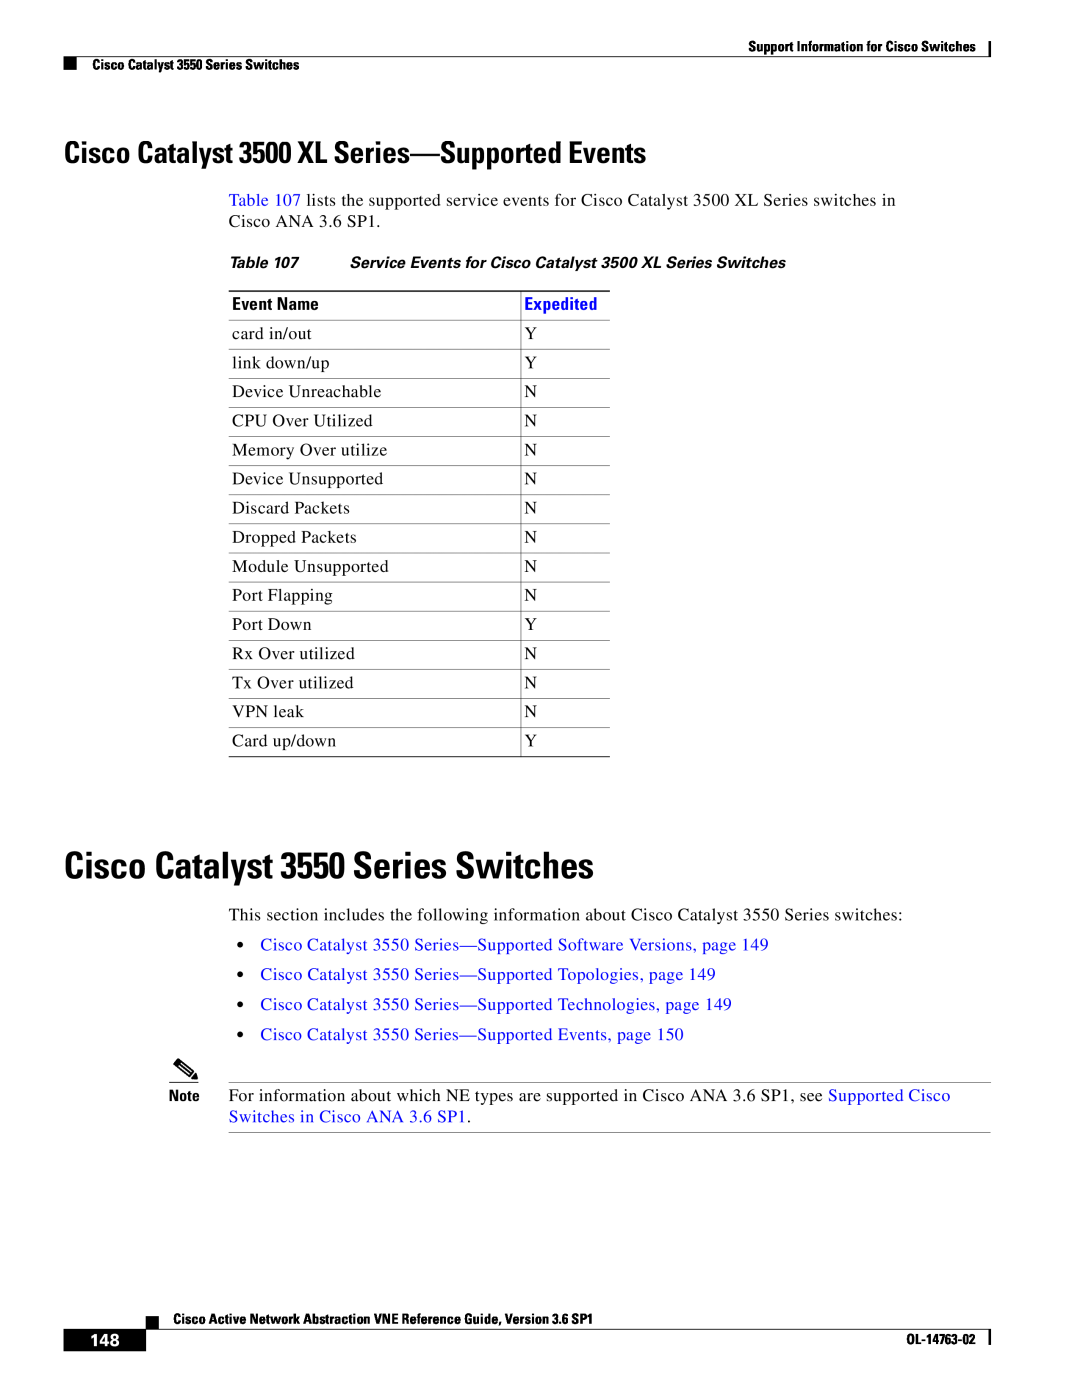 Cisco Systems OL-14763-02 Cisco Catalyst 3550 Series Switches, Cisco Catalyst 3500 XL Series-Supported Events, Event Name 